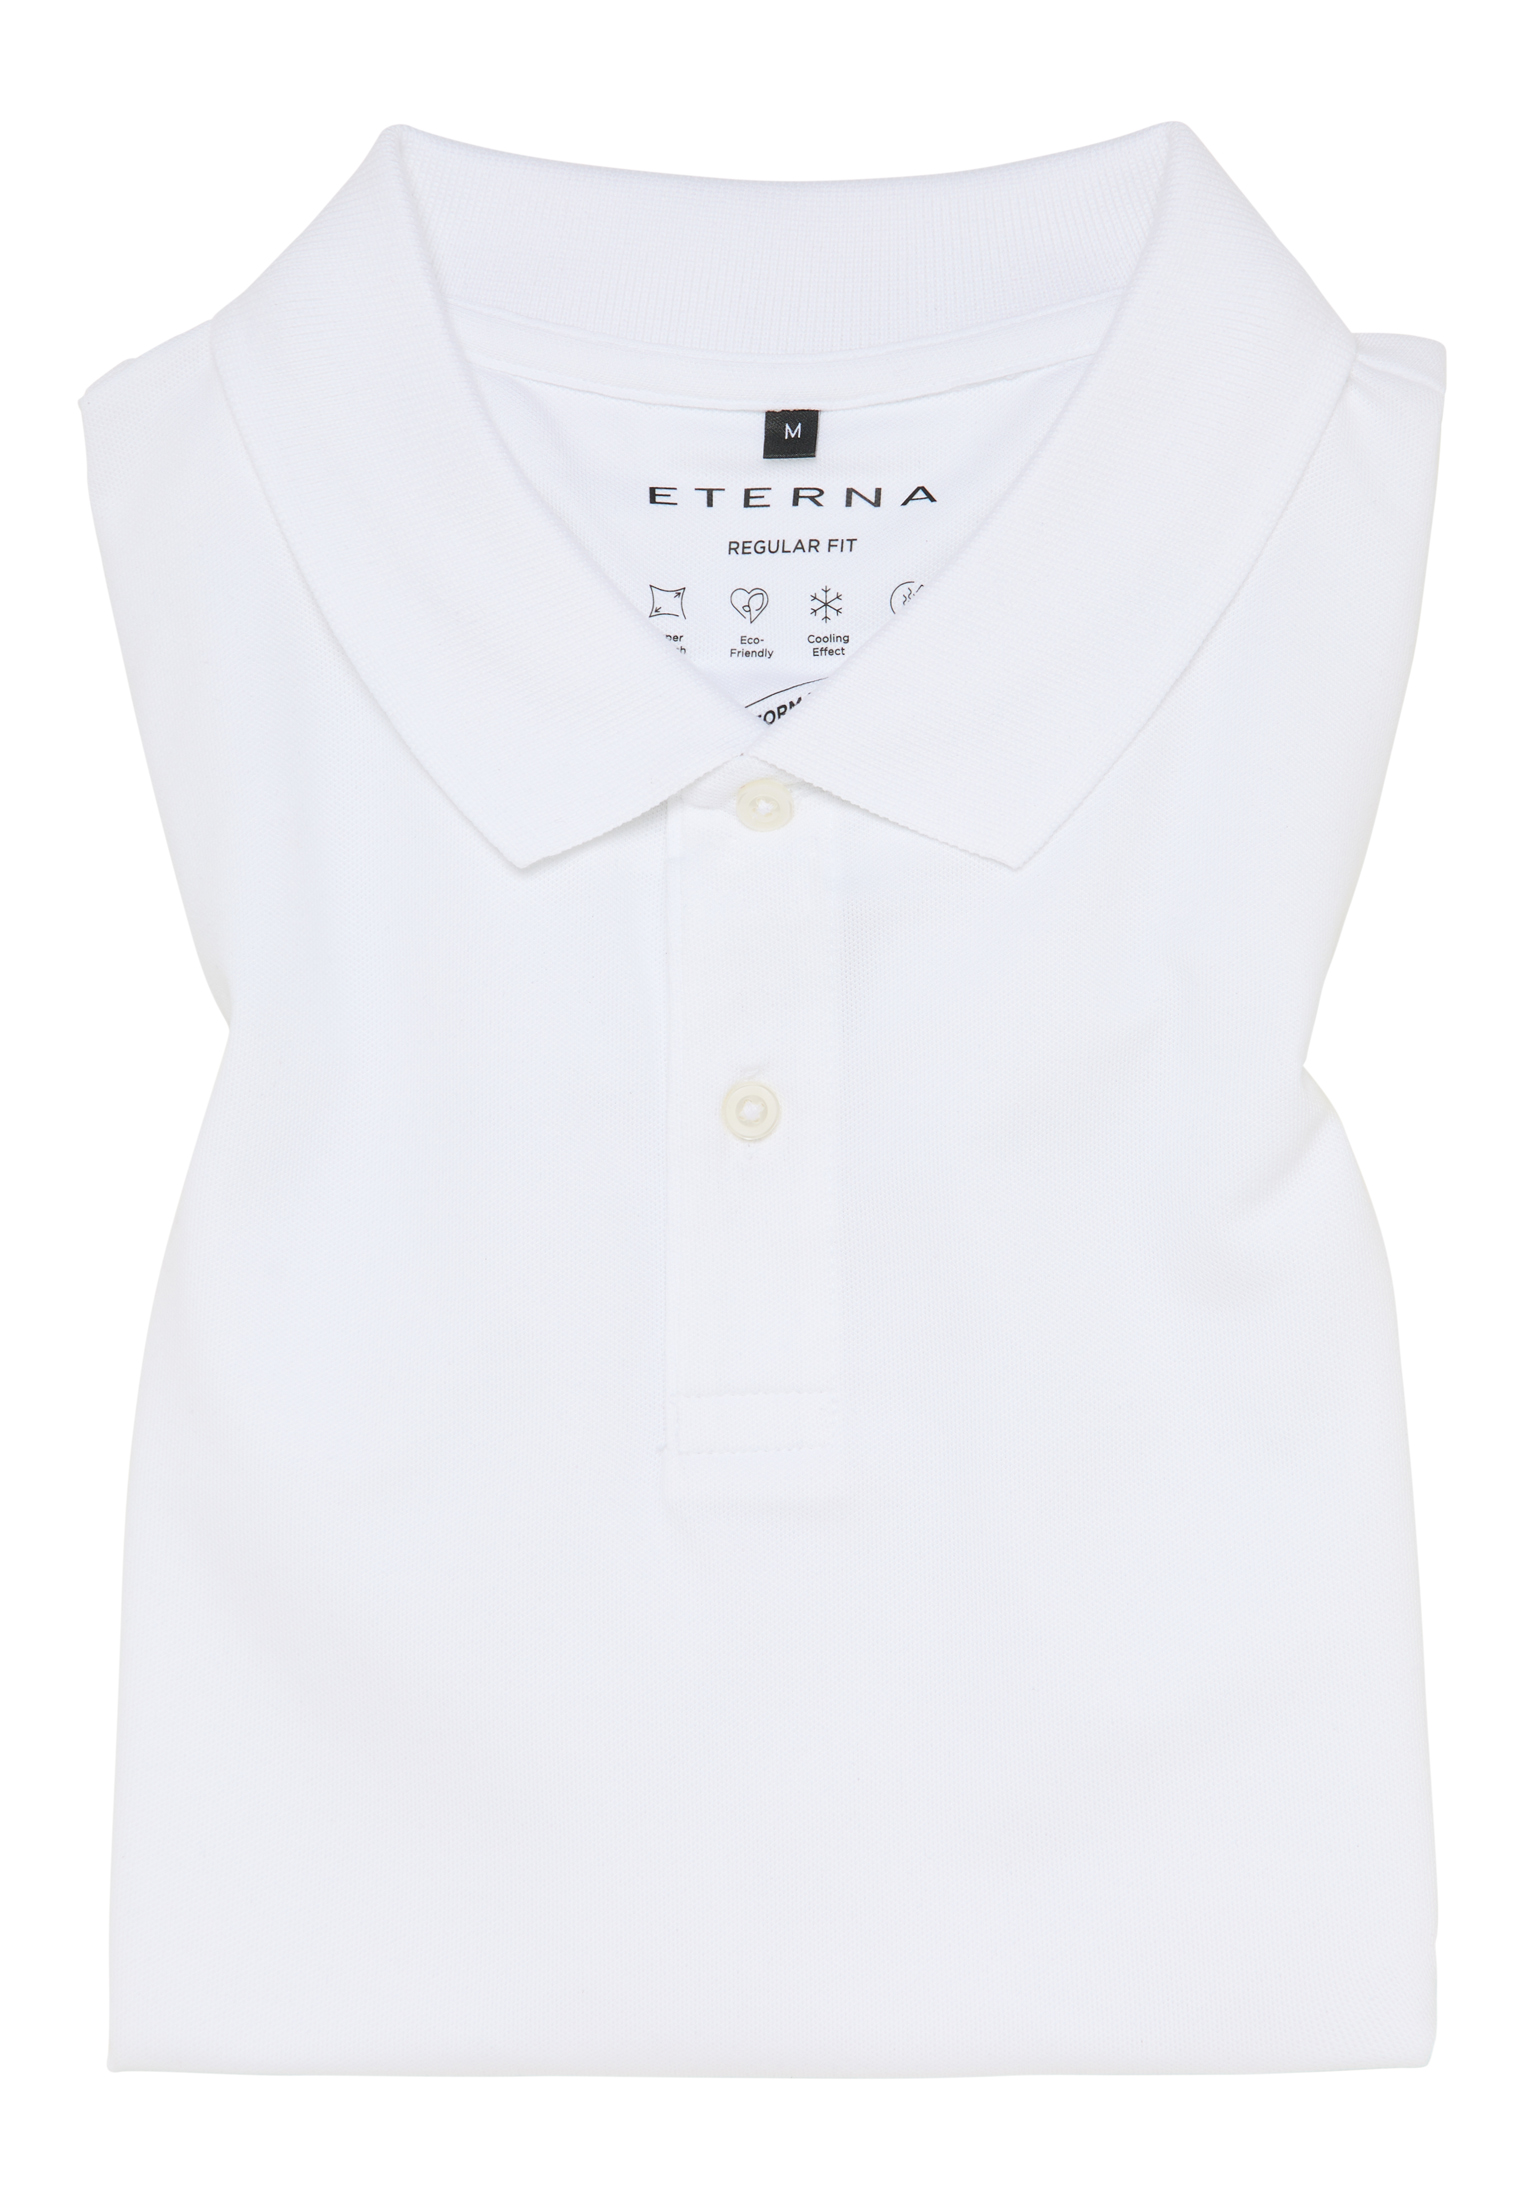 plain white Polo MODERN in sleeve short 1SP00175-00-01-42-1/2 42 | | FIT shirt | white |